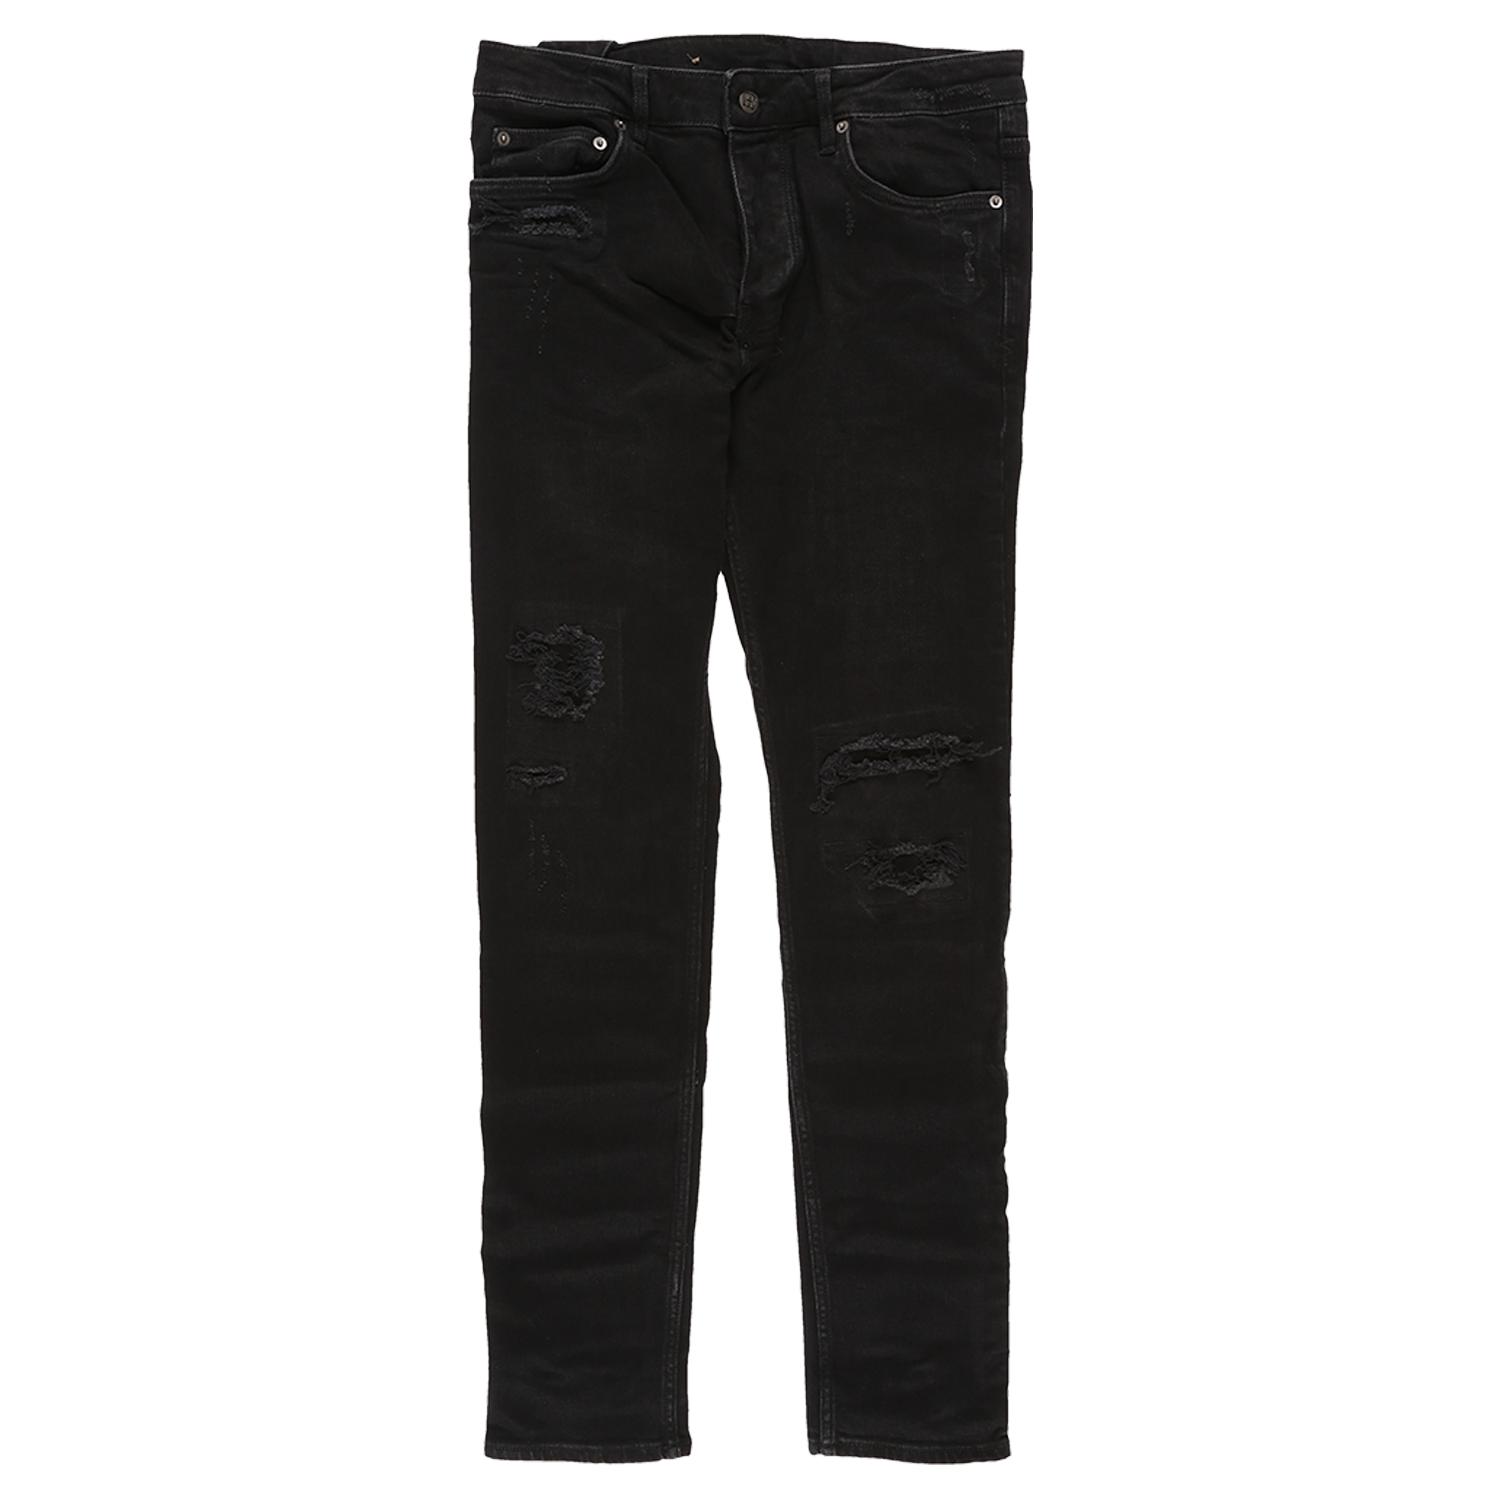 Ksubi Denim Chitch Boneyard Jeans in Black for Men - Lyst